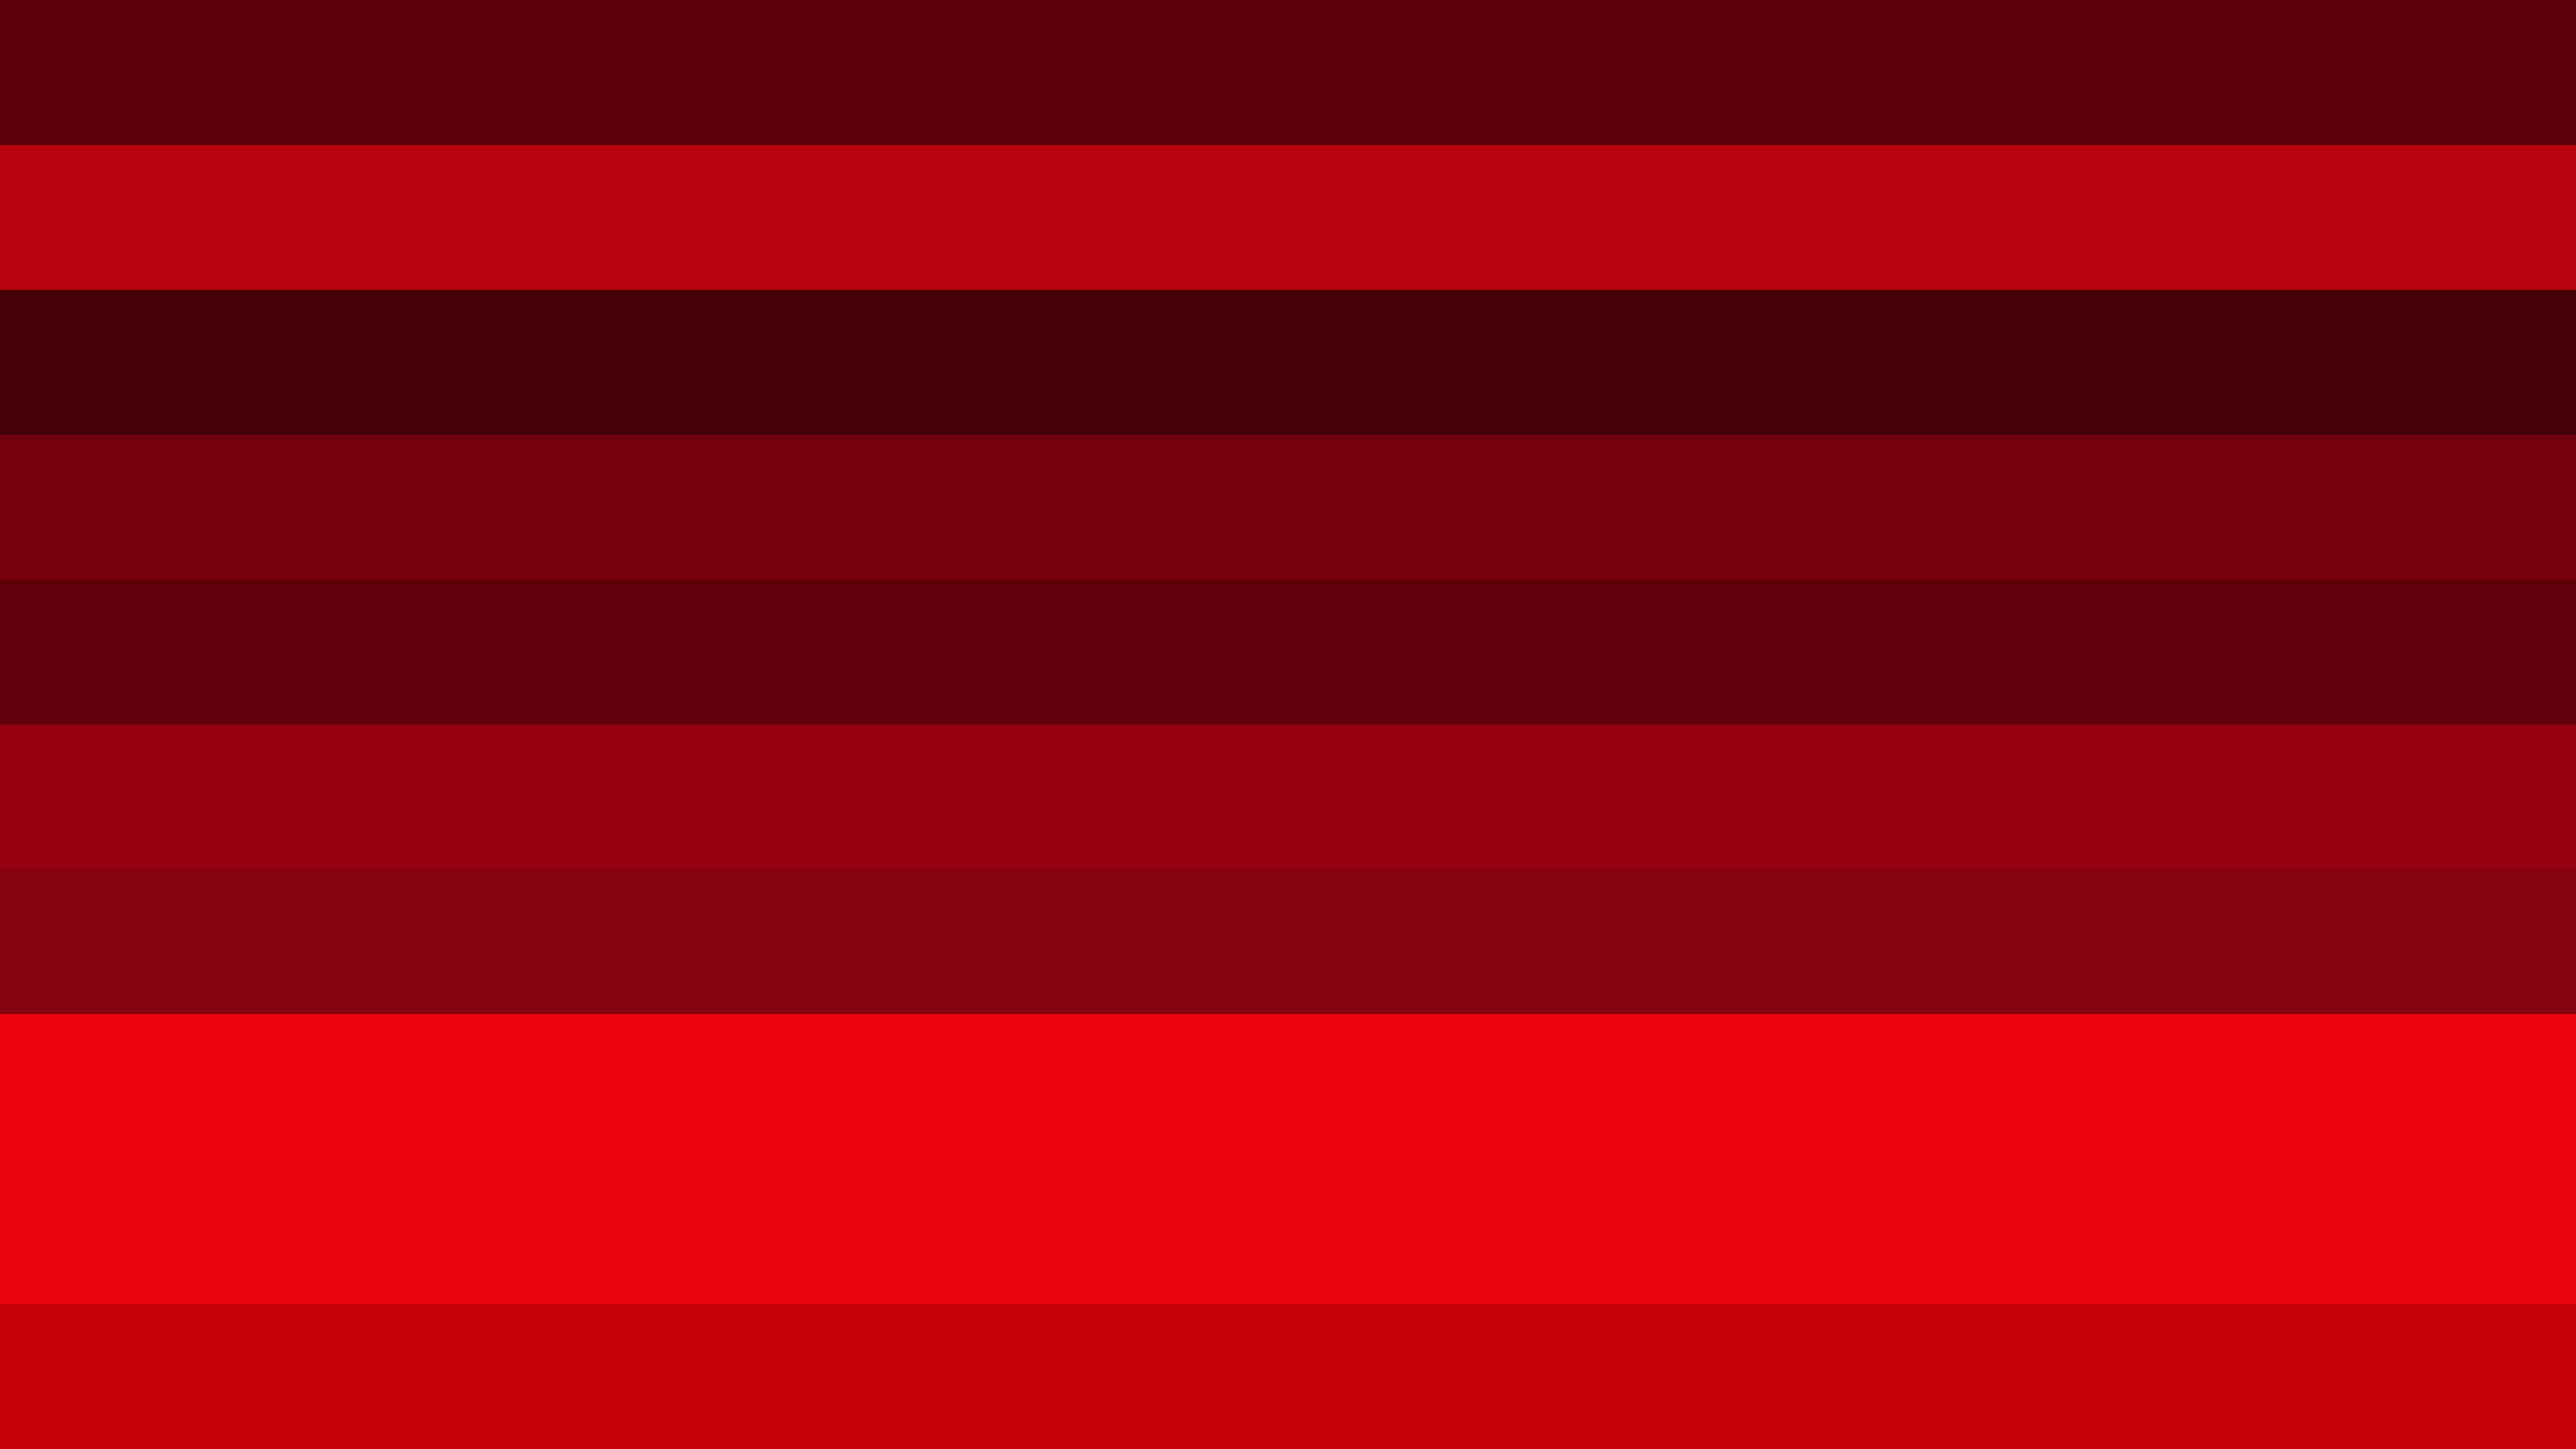 Free Dark Red Stripes Background Image